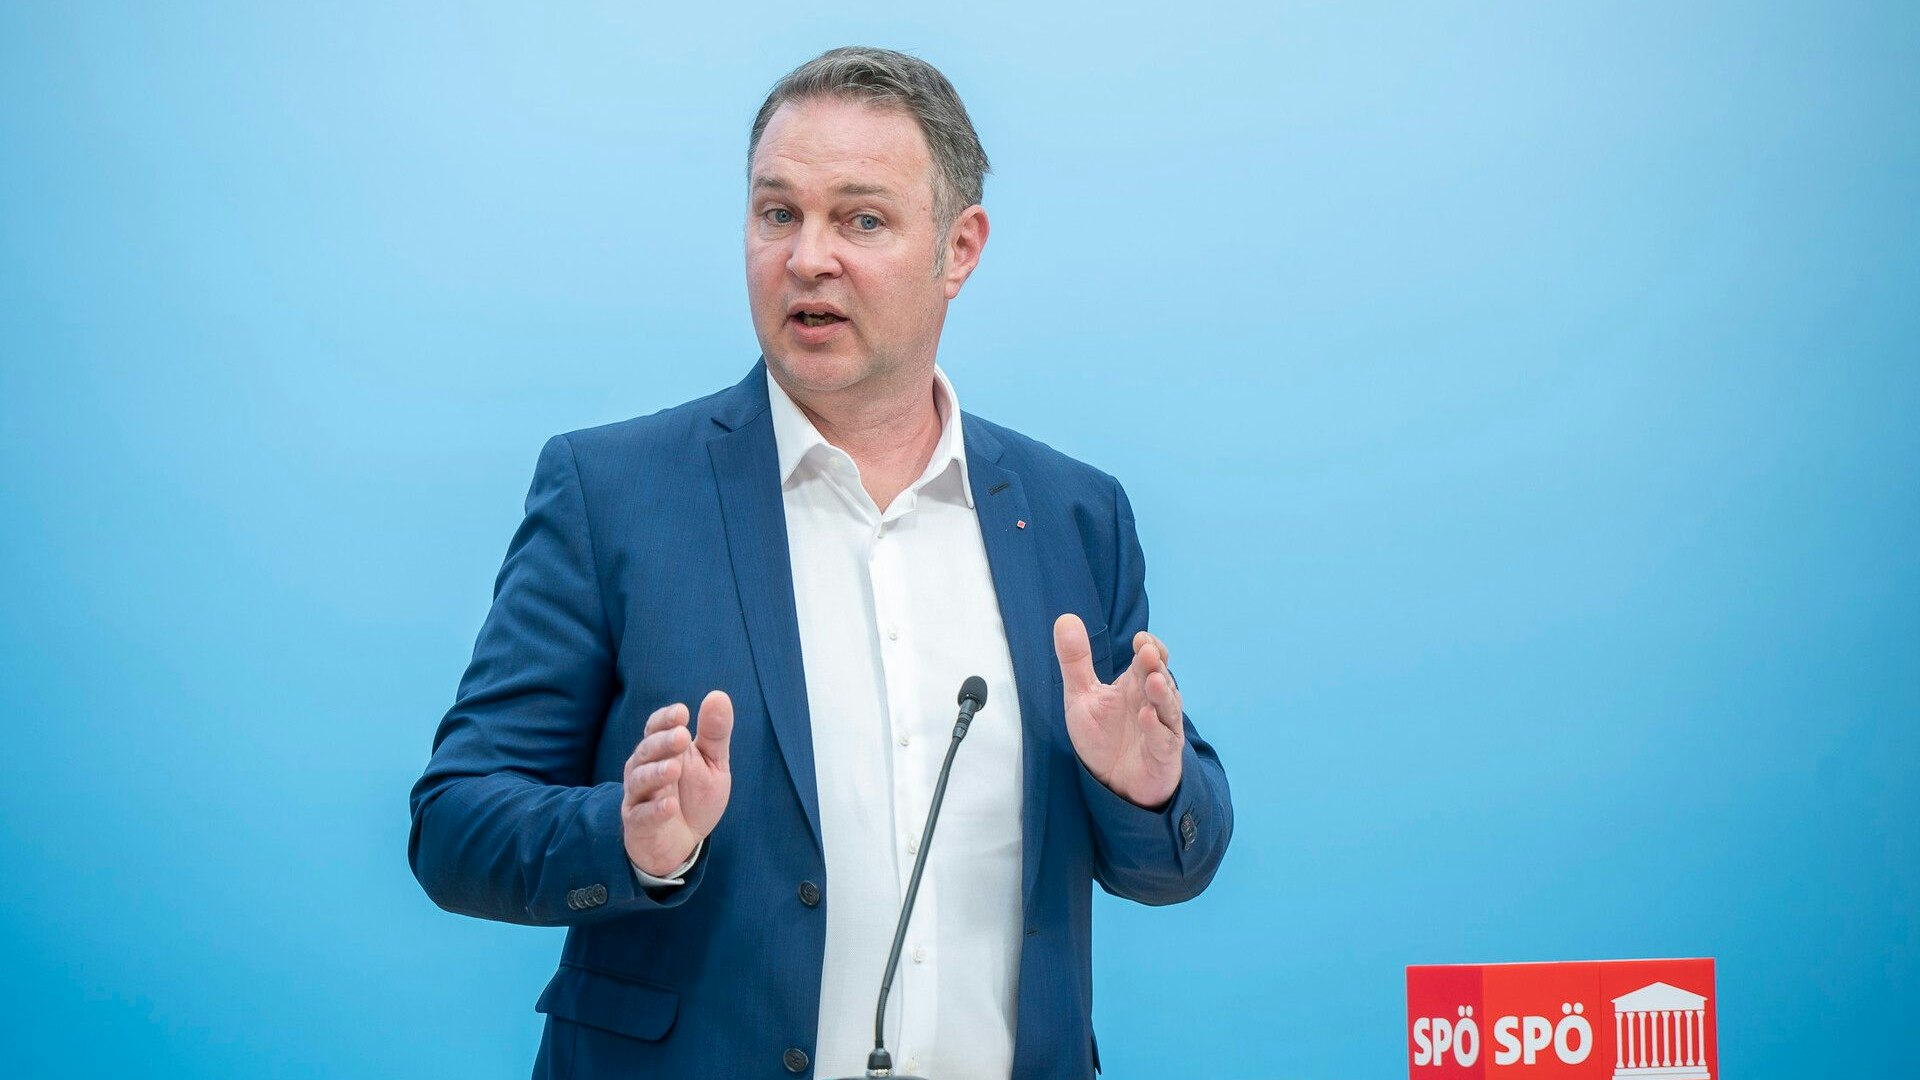 SPÖ-Chef Andreas Babler "erzählt keine Geschichte", sagt Polit-Experte Peter Hajek